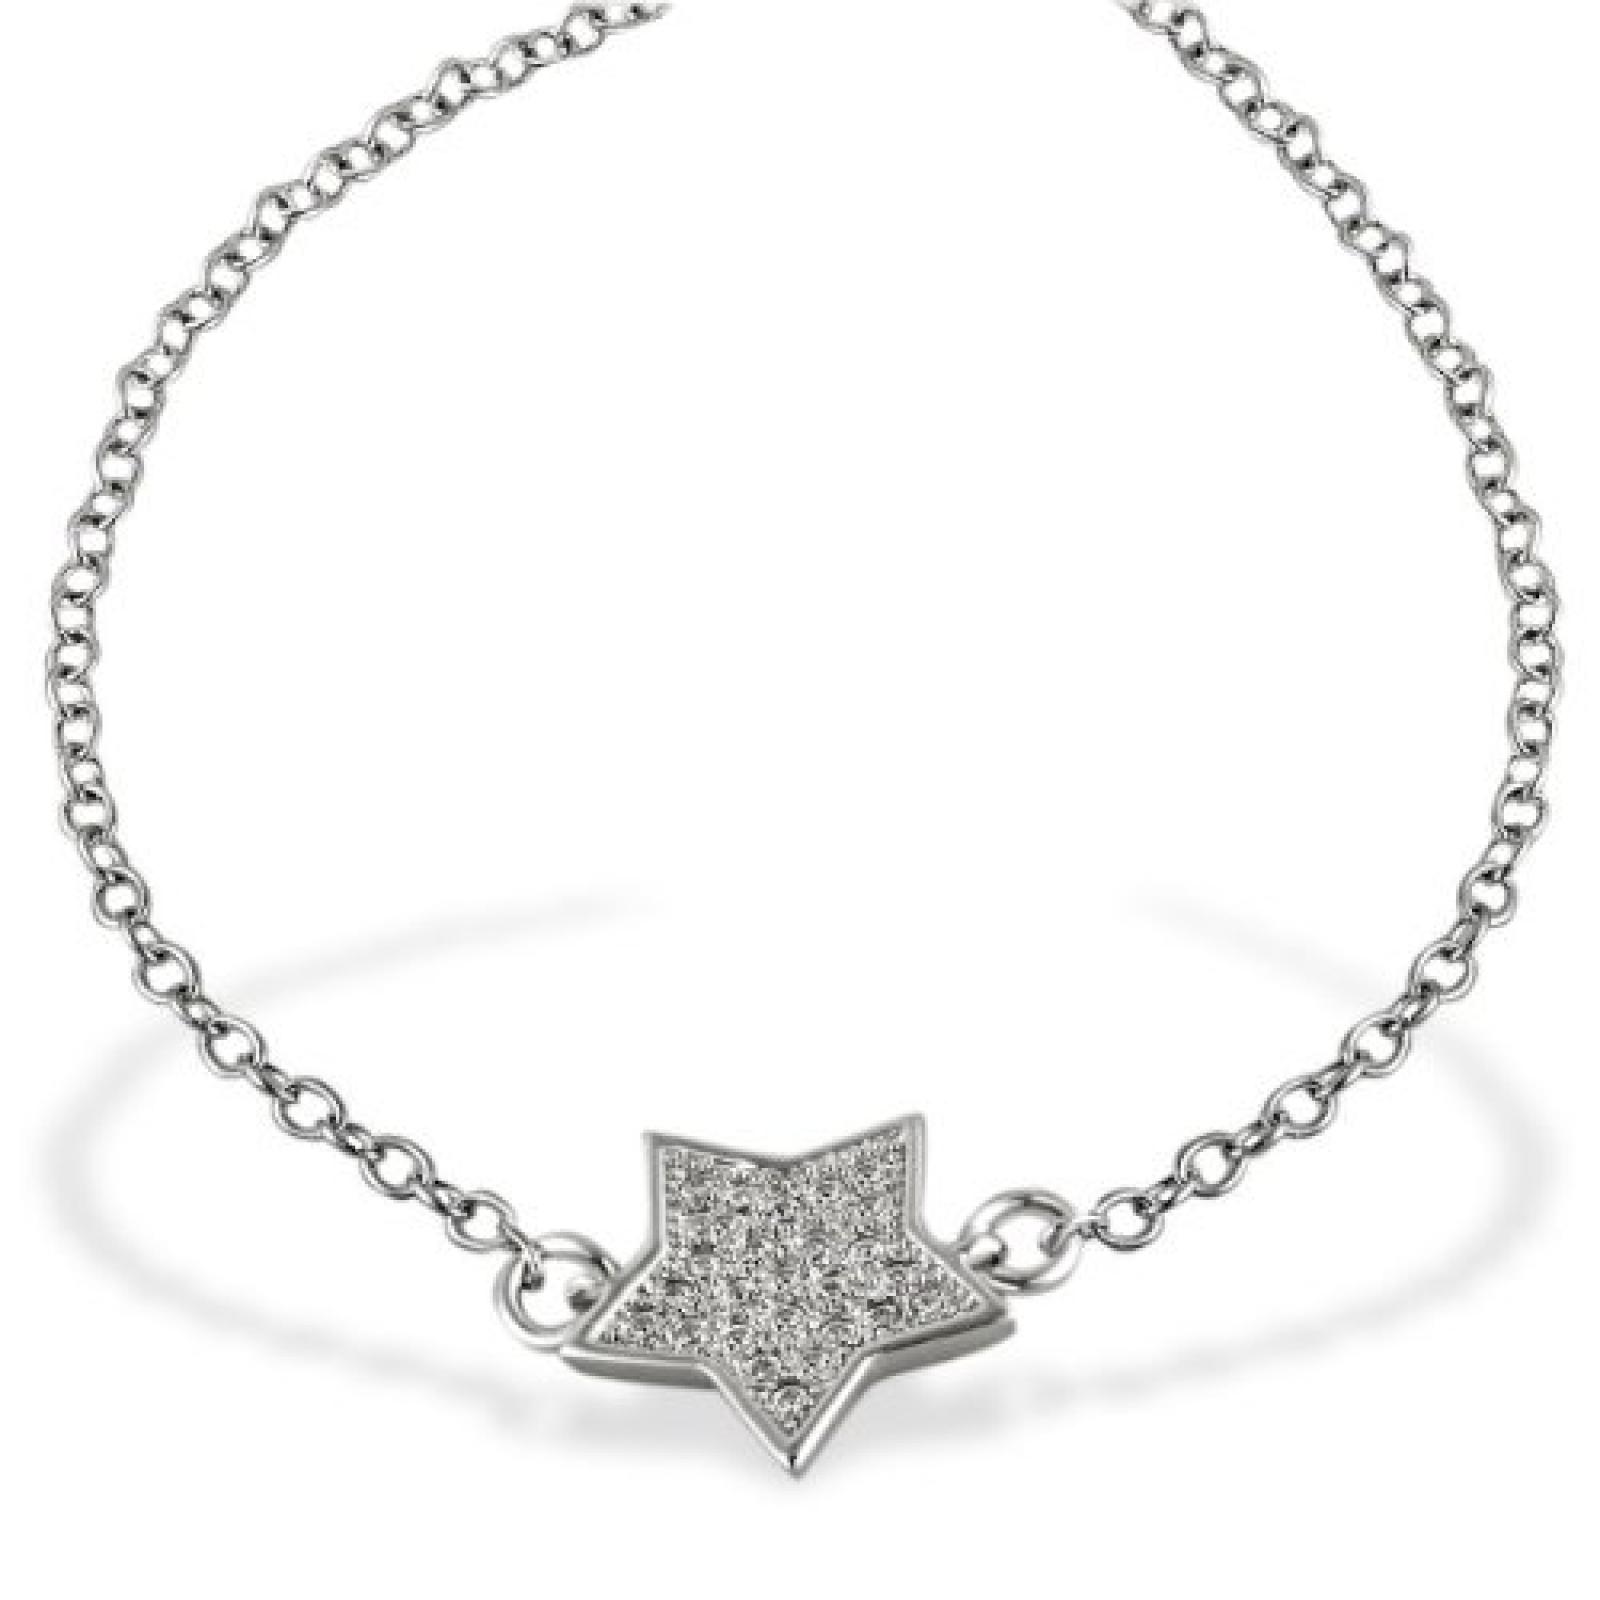 Goldmaid Damen-Armband Stern 925 Silber 26 weiße Zirkonia 19,5 cm Fo A5904S 